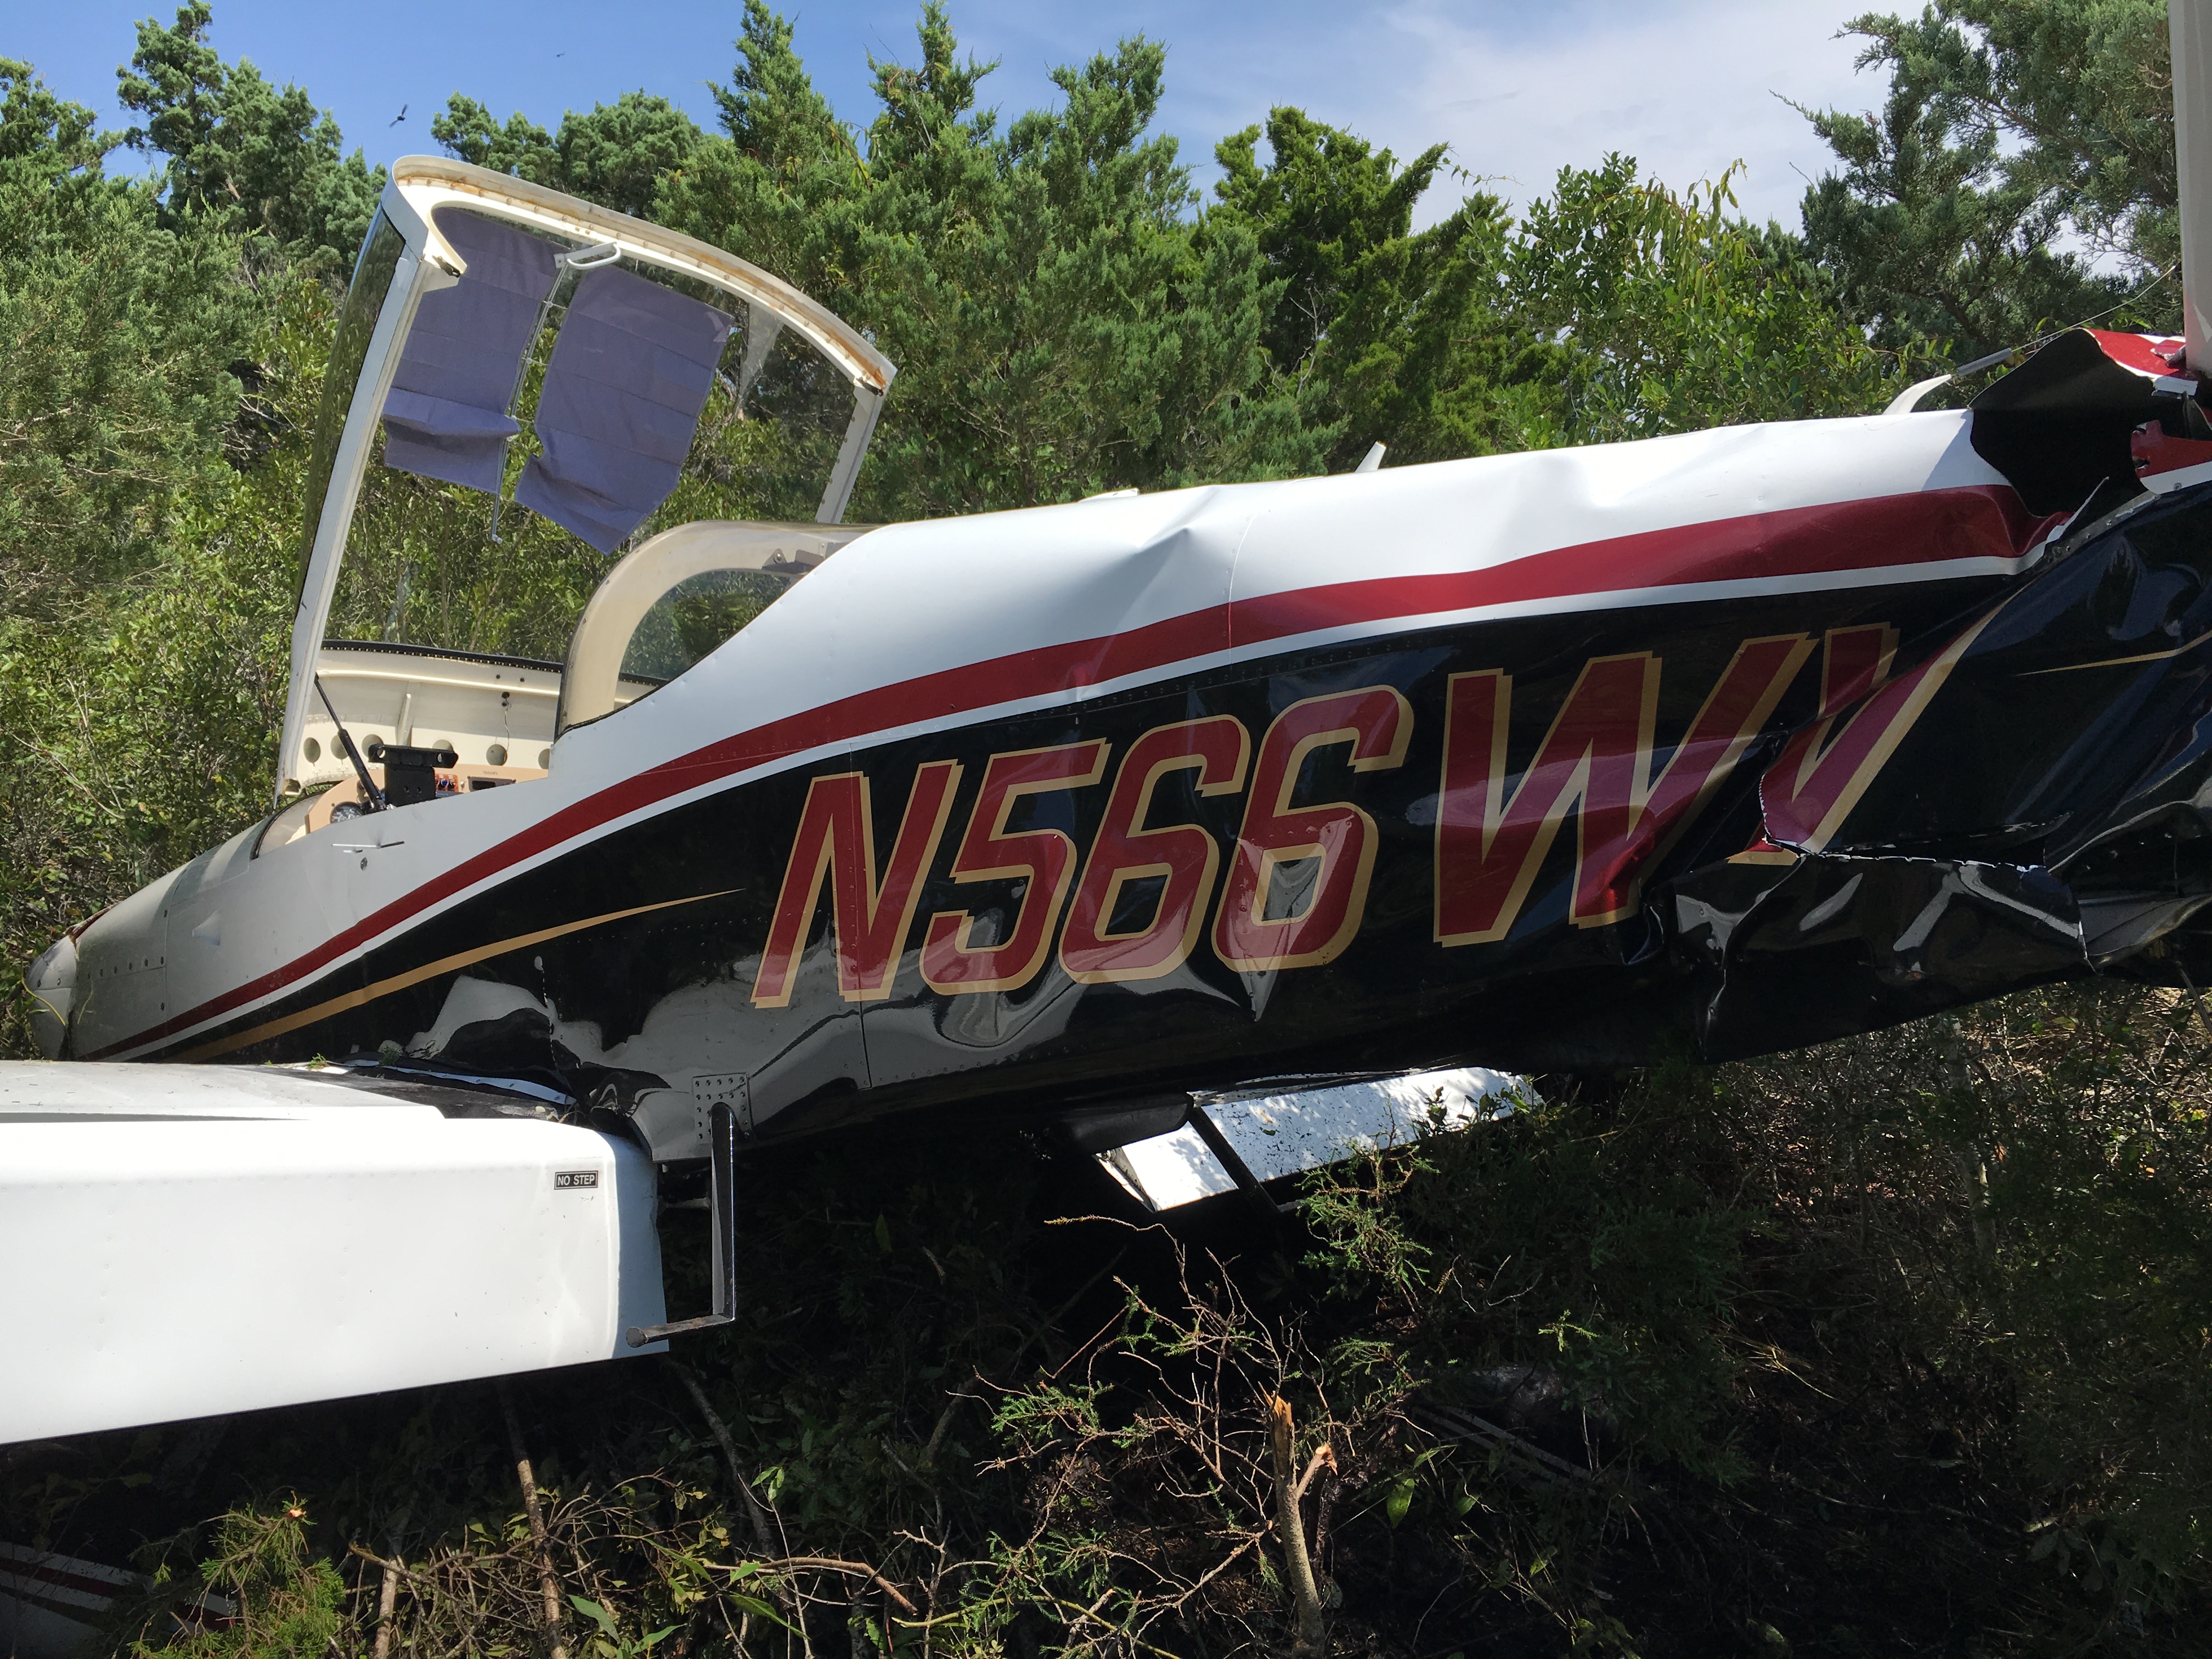 Landing area of plane that crash landed on Ocracoke Island.